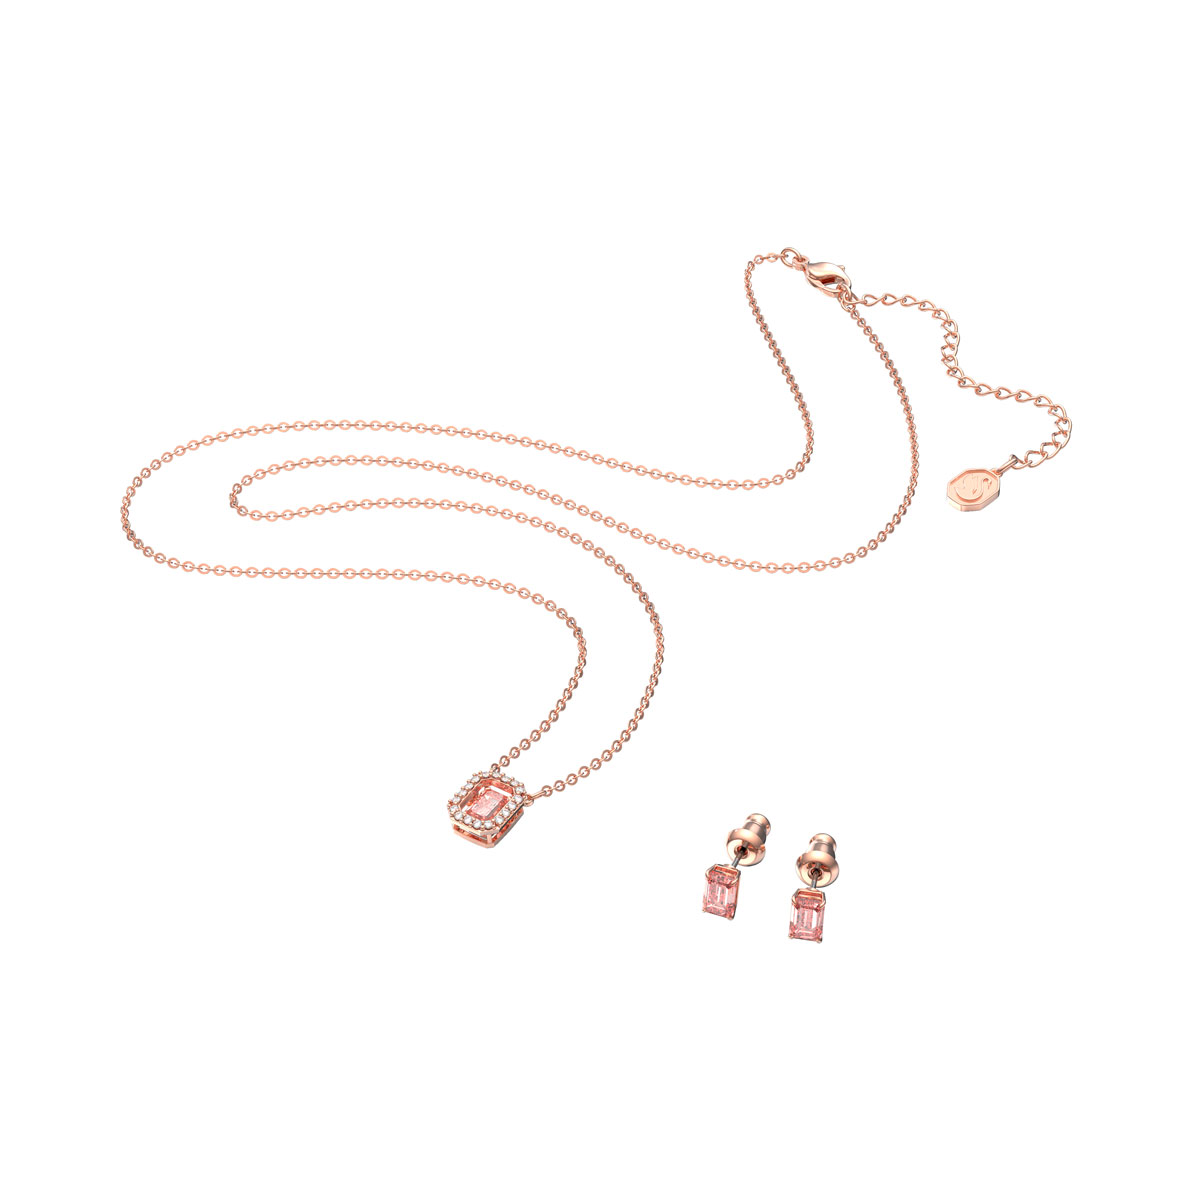 Swarovski Millenia Necklace Set, Octagon Cut Swarovski Zirconia, Pink, Rose-Gold Tone Plated